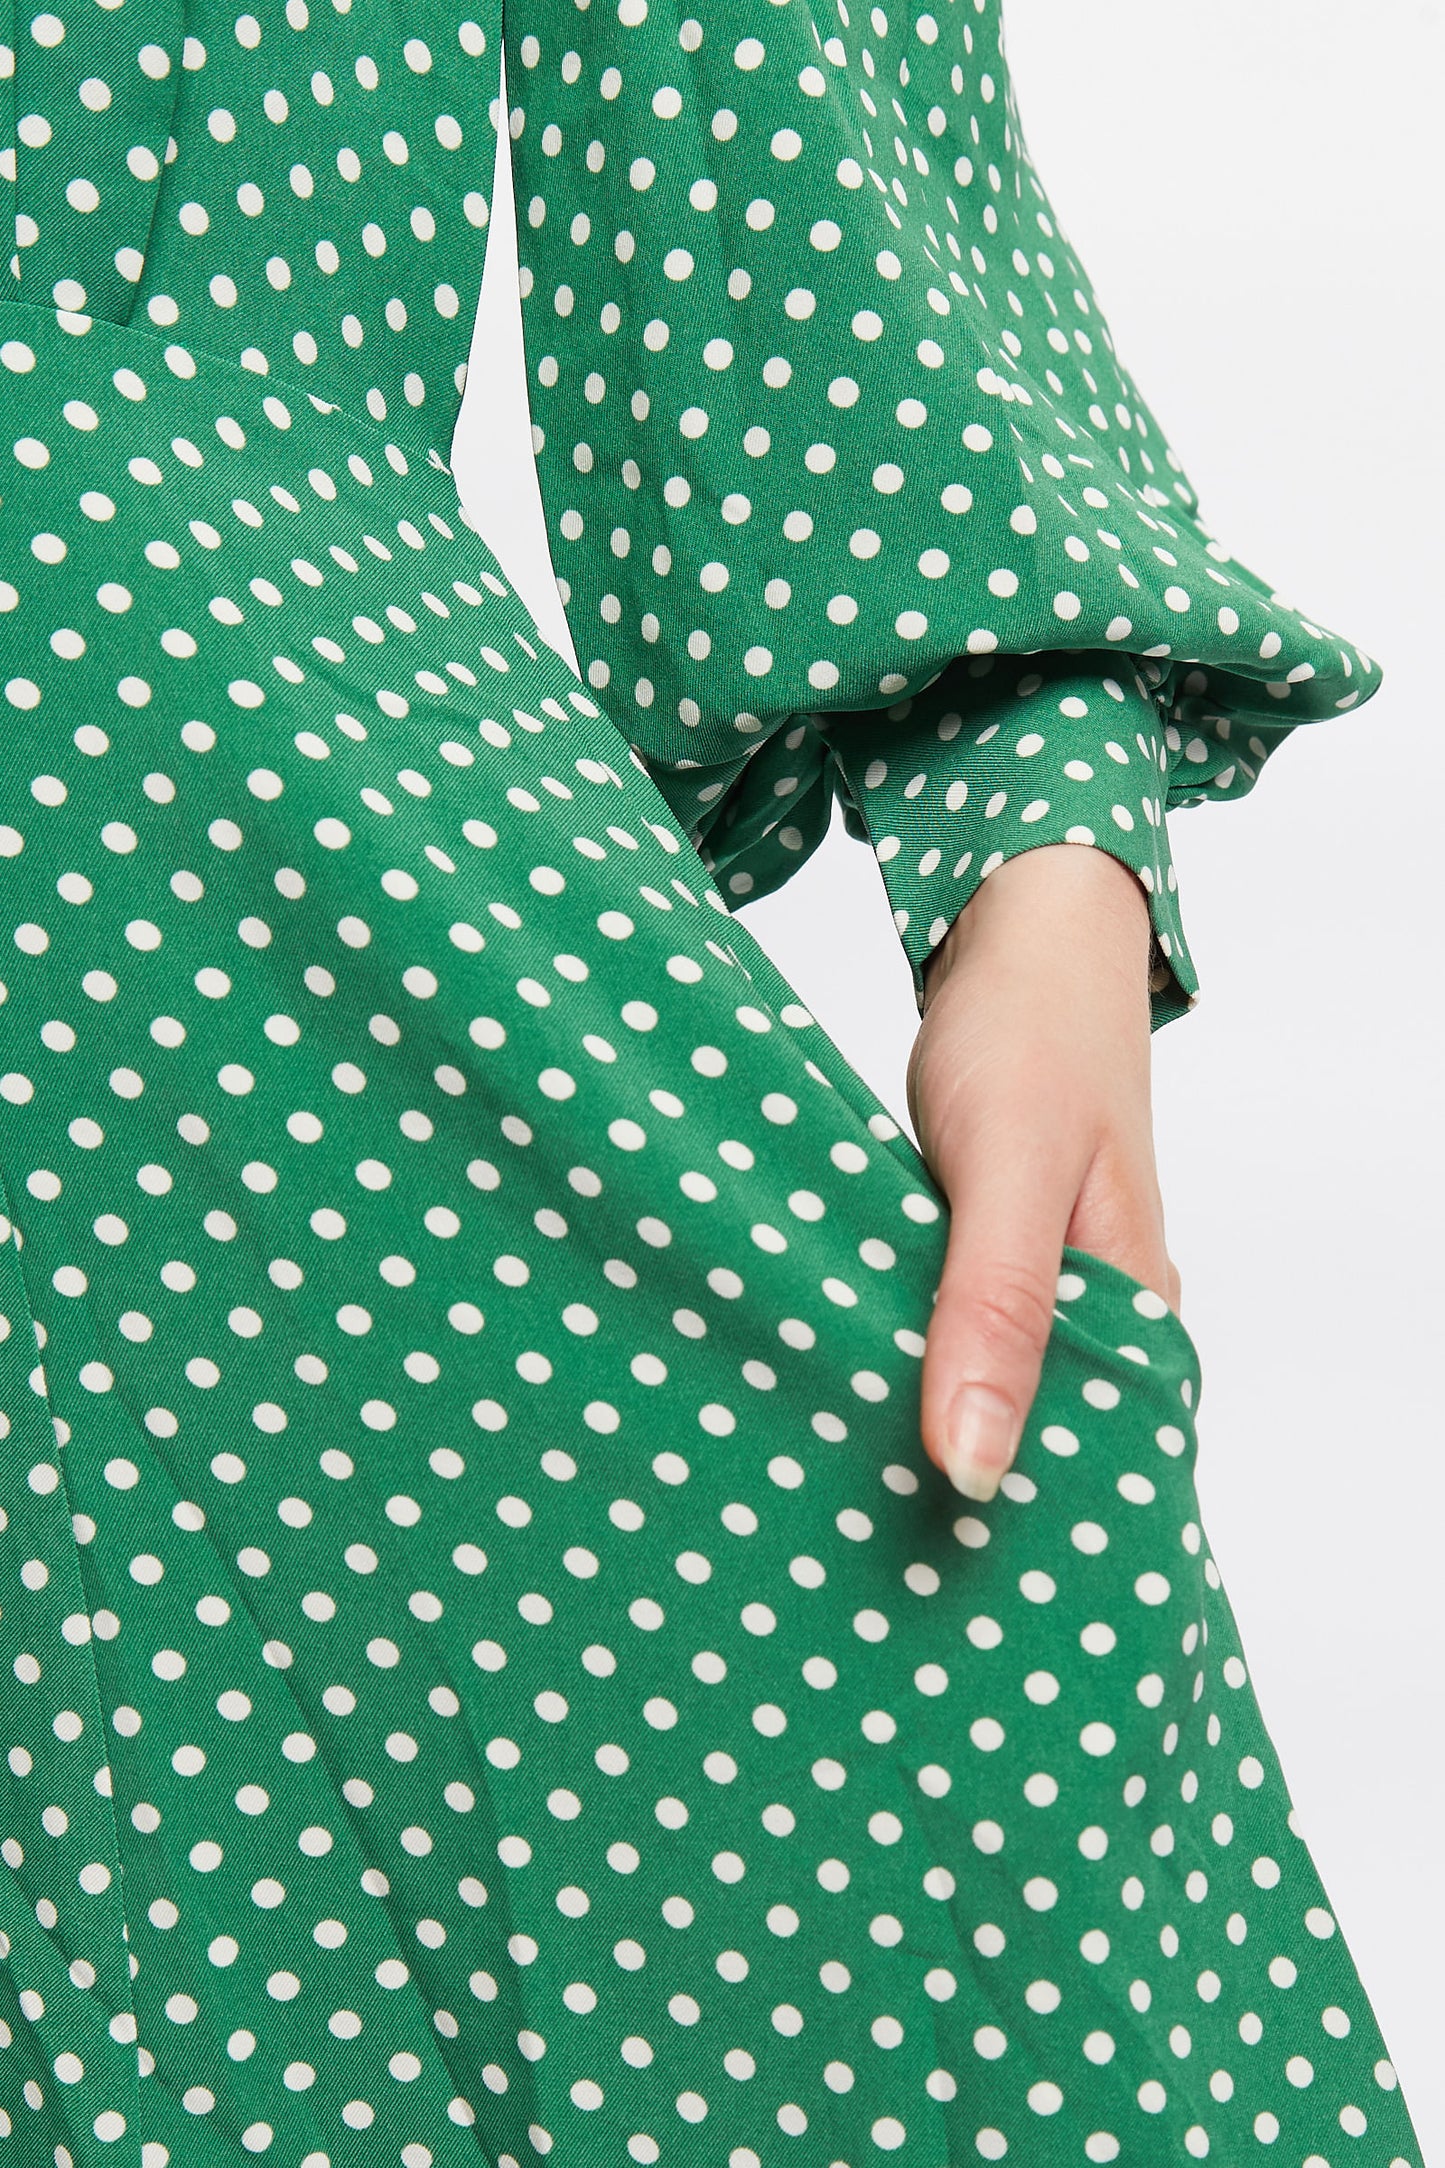 Louche Nancy Polka Dot Print Long Sleeve Mini Dress